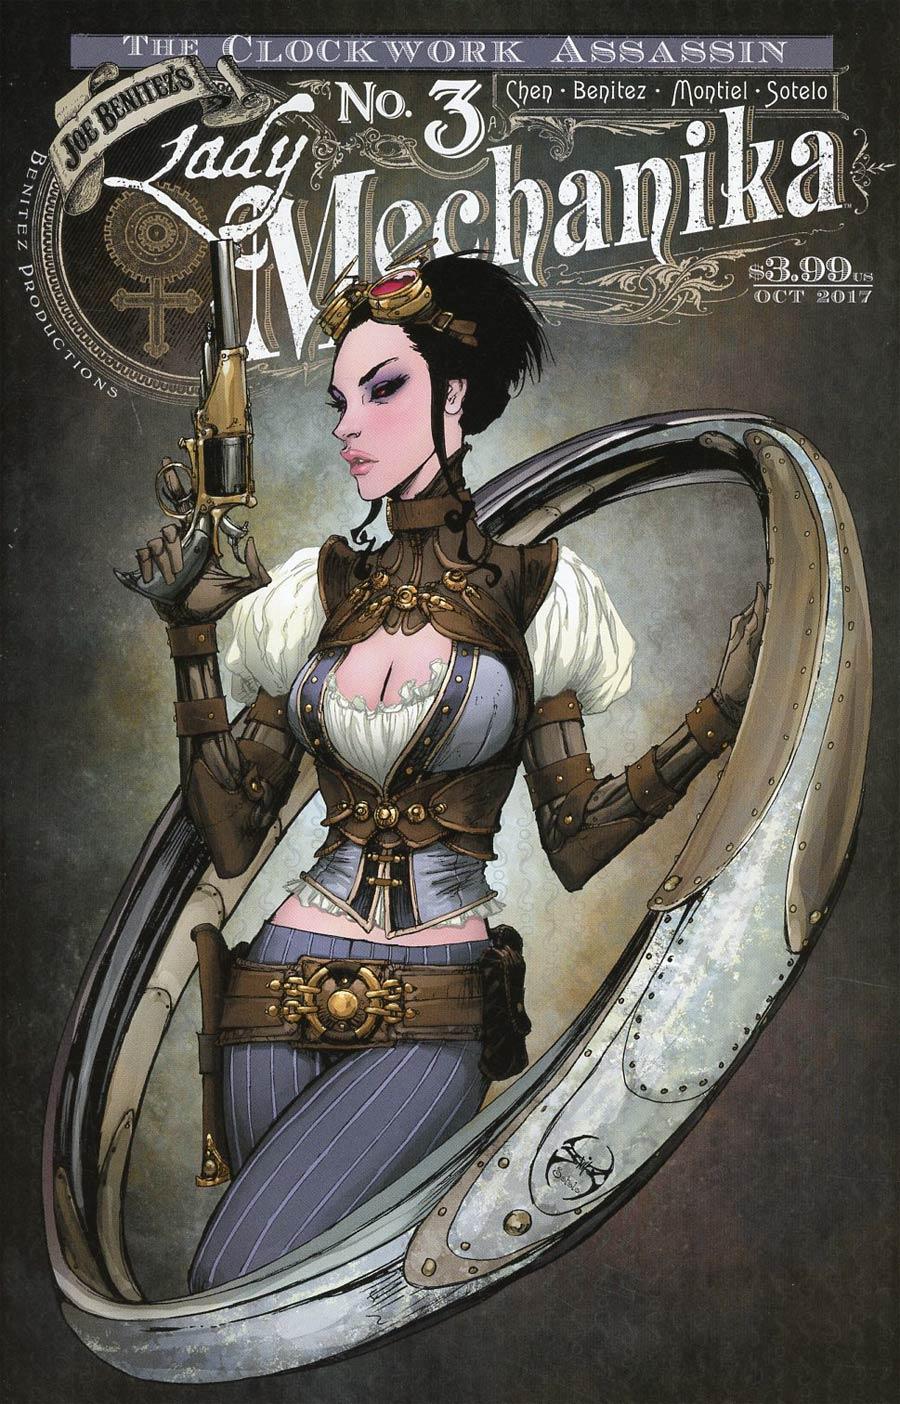 Lady Mechanika Clockwork Assassin Vol. 1 #3